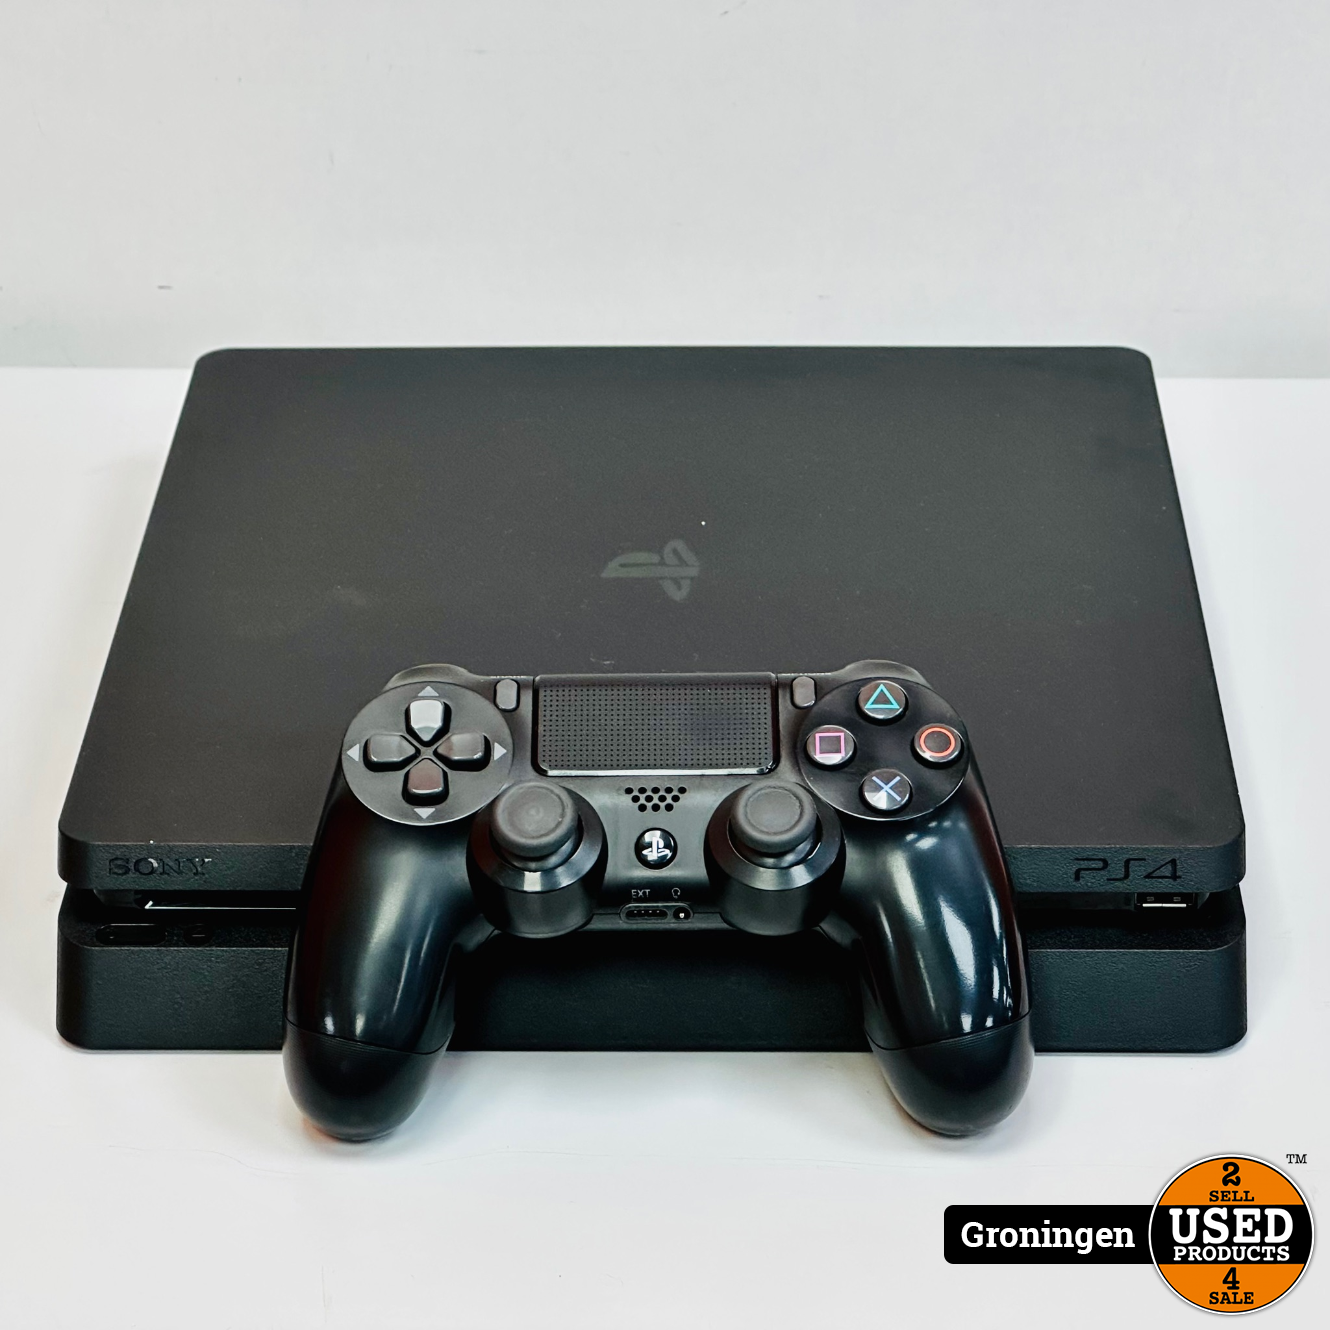 PS4] Sony PlayStation 4 Slim 1TB Zwart | incl. 4 Controller en kabels - Used Products Groningen